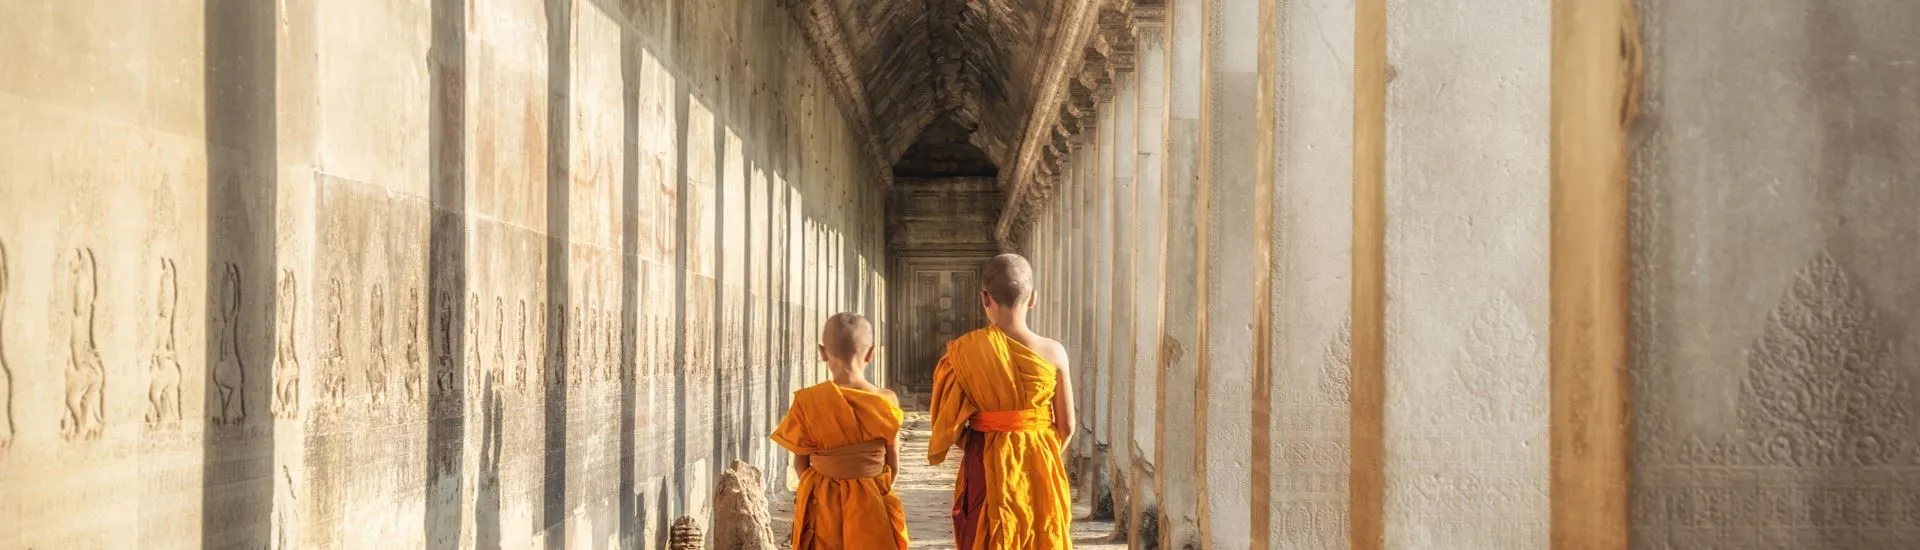 Siem Reap, Cambodia - Two monks walking in Angkor Wat temple